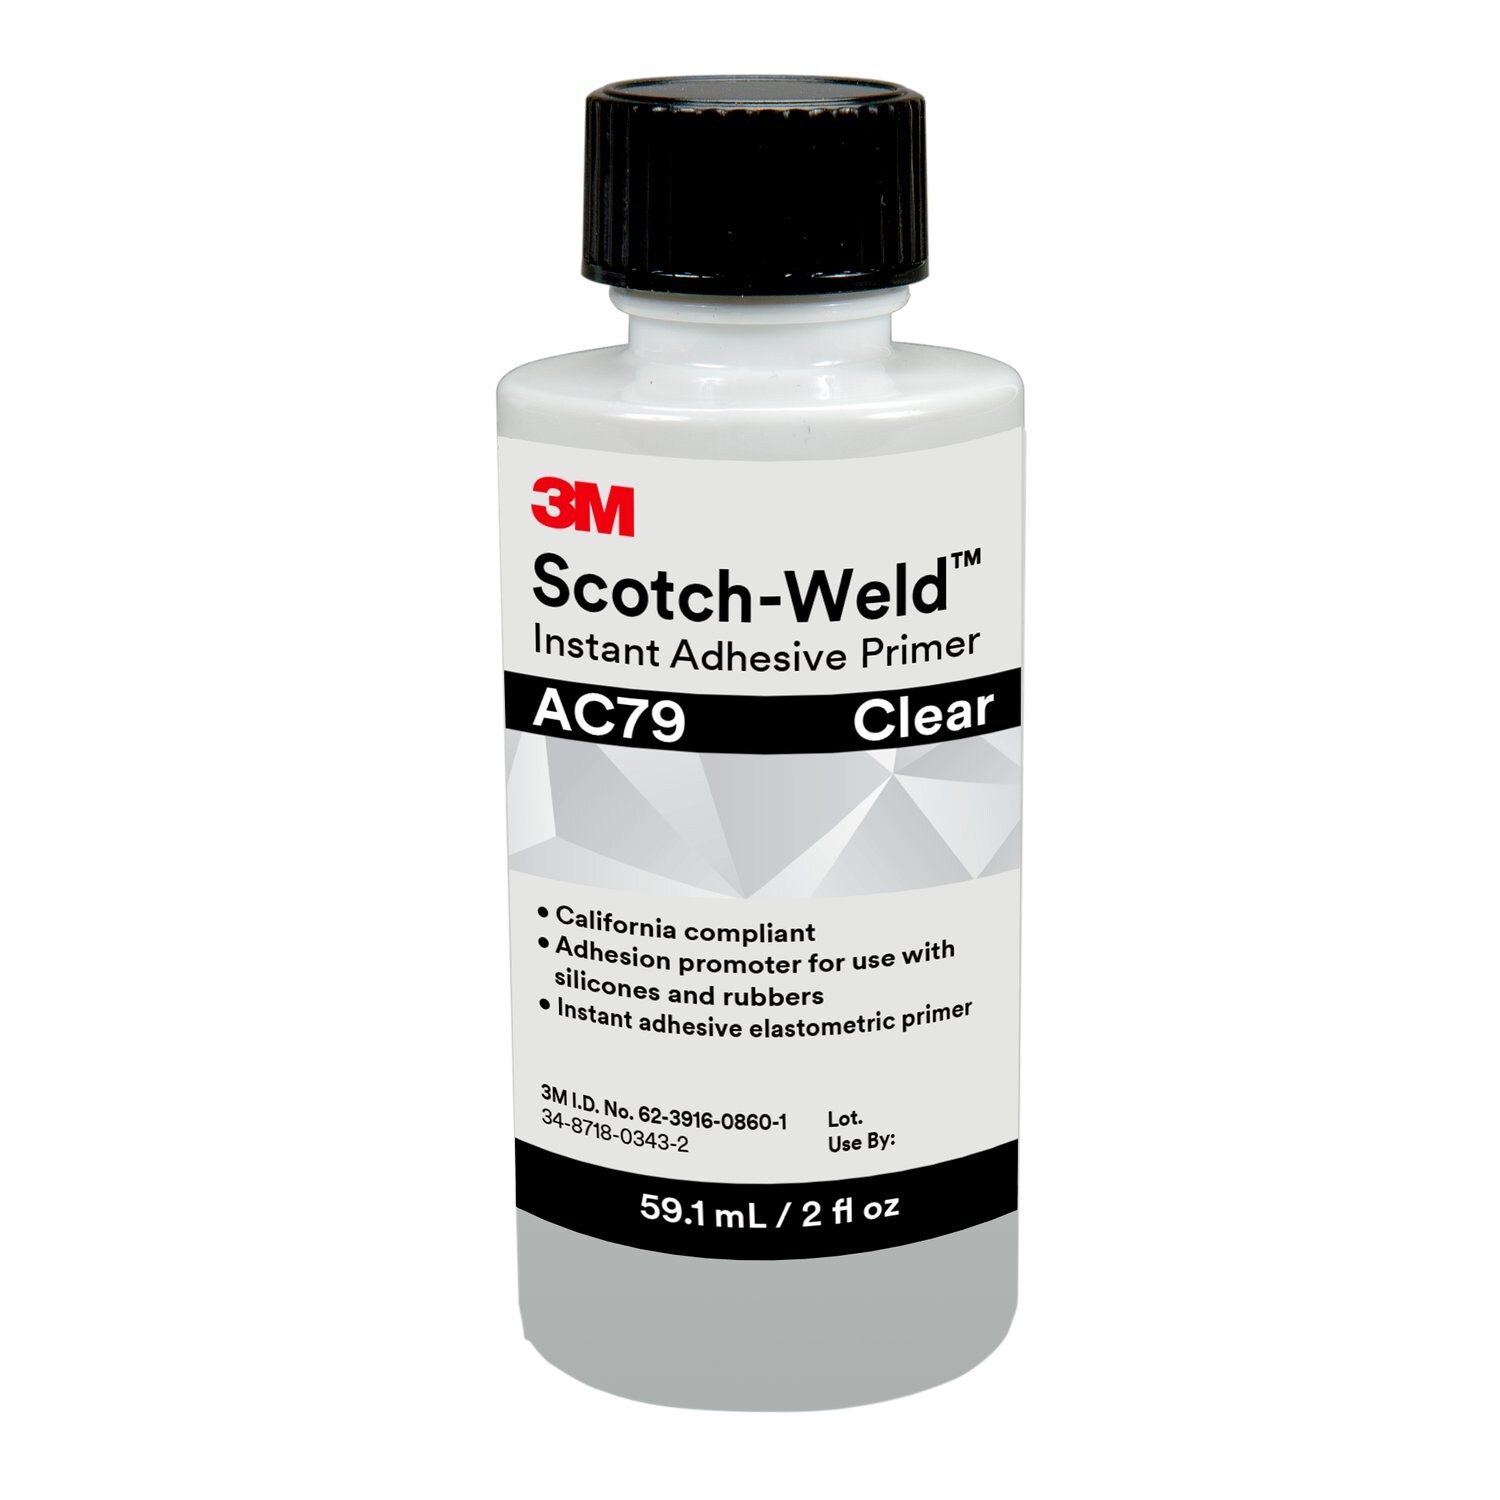 7100039262 - 3M Scotch-Weld Instant Adhesive Primer AC79, Clear, 2 fl oz, 10
Bottles/Case